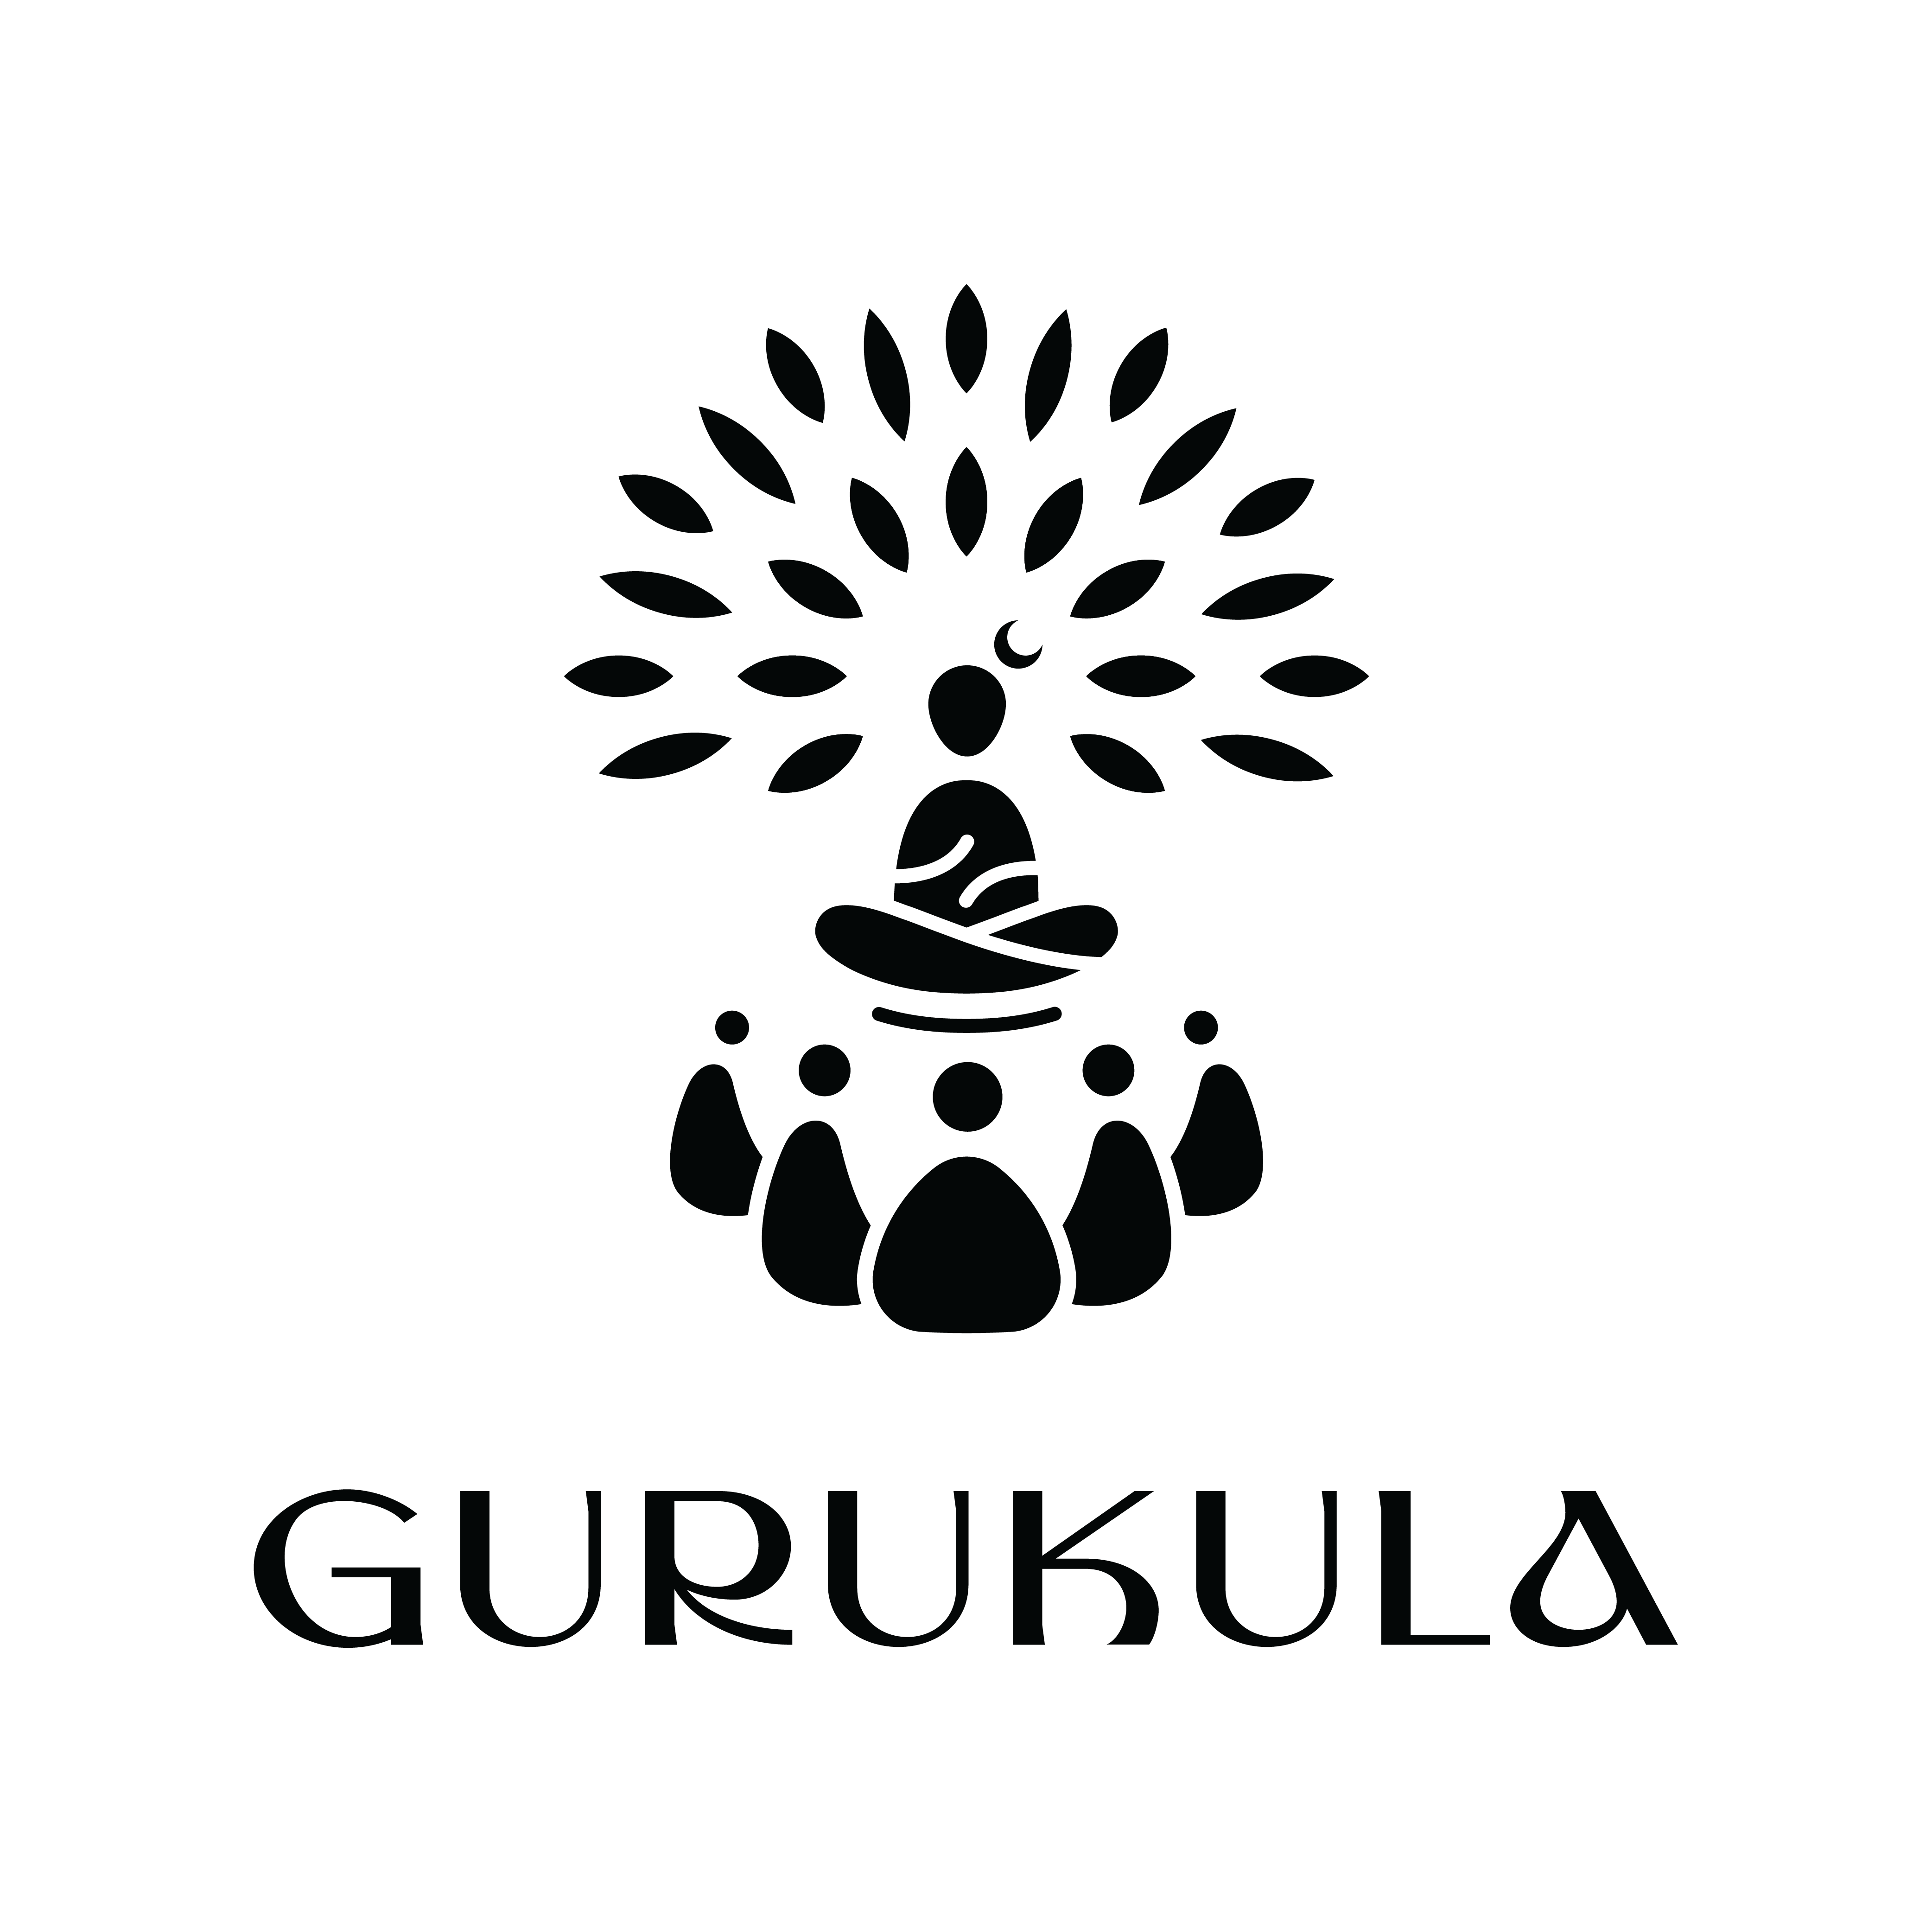 Gurukul logo